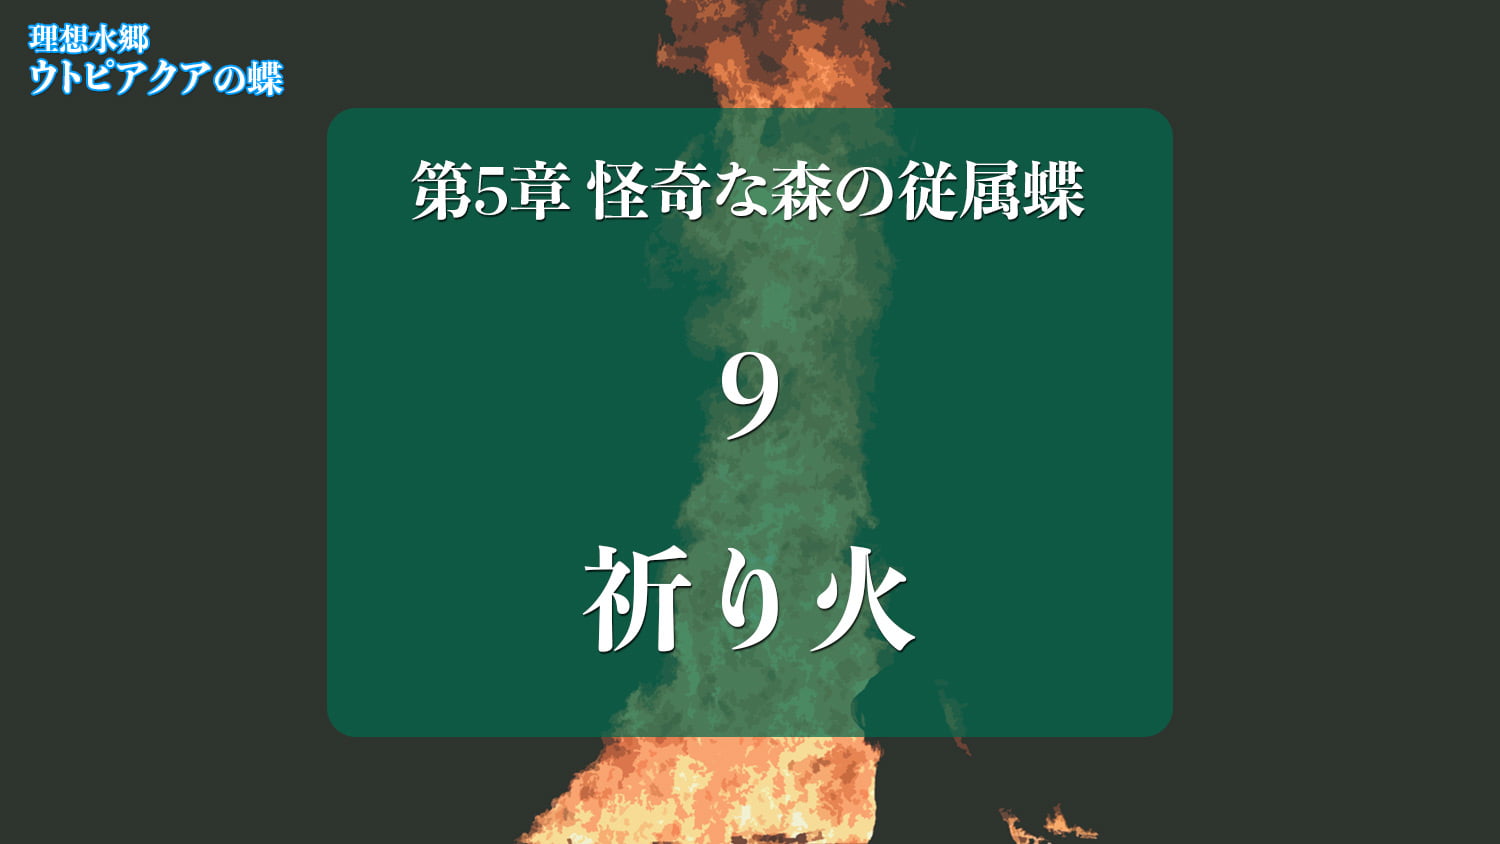 Web連載小説「理想水郷ウトピアクアの蝶」第5章 怪奇な森の従属蝶 9.祈り火